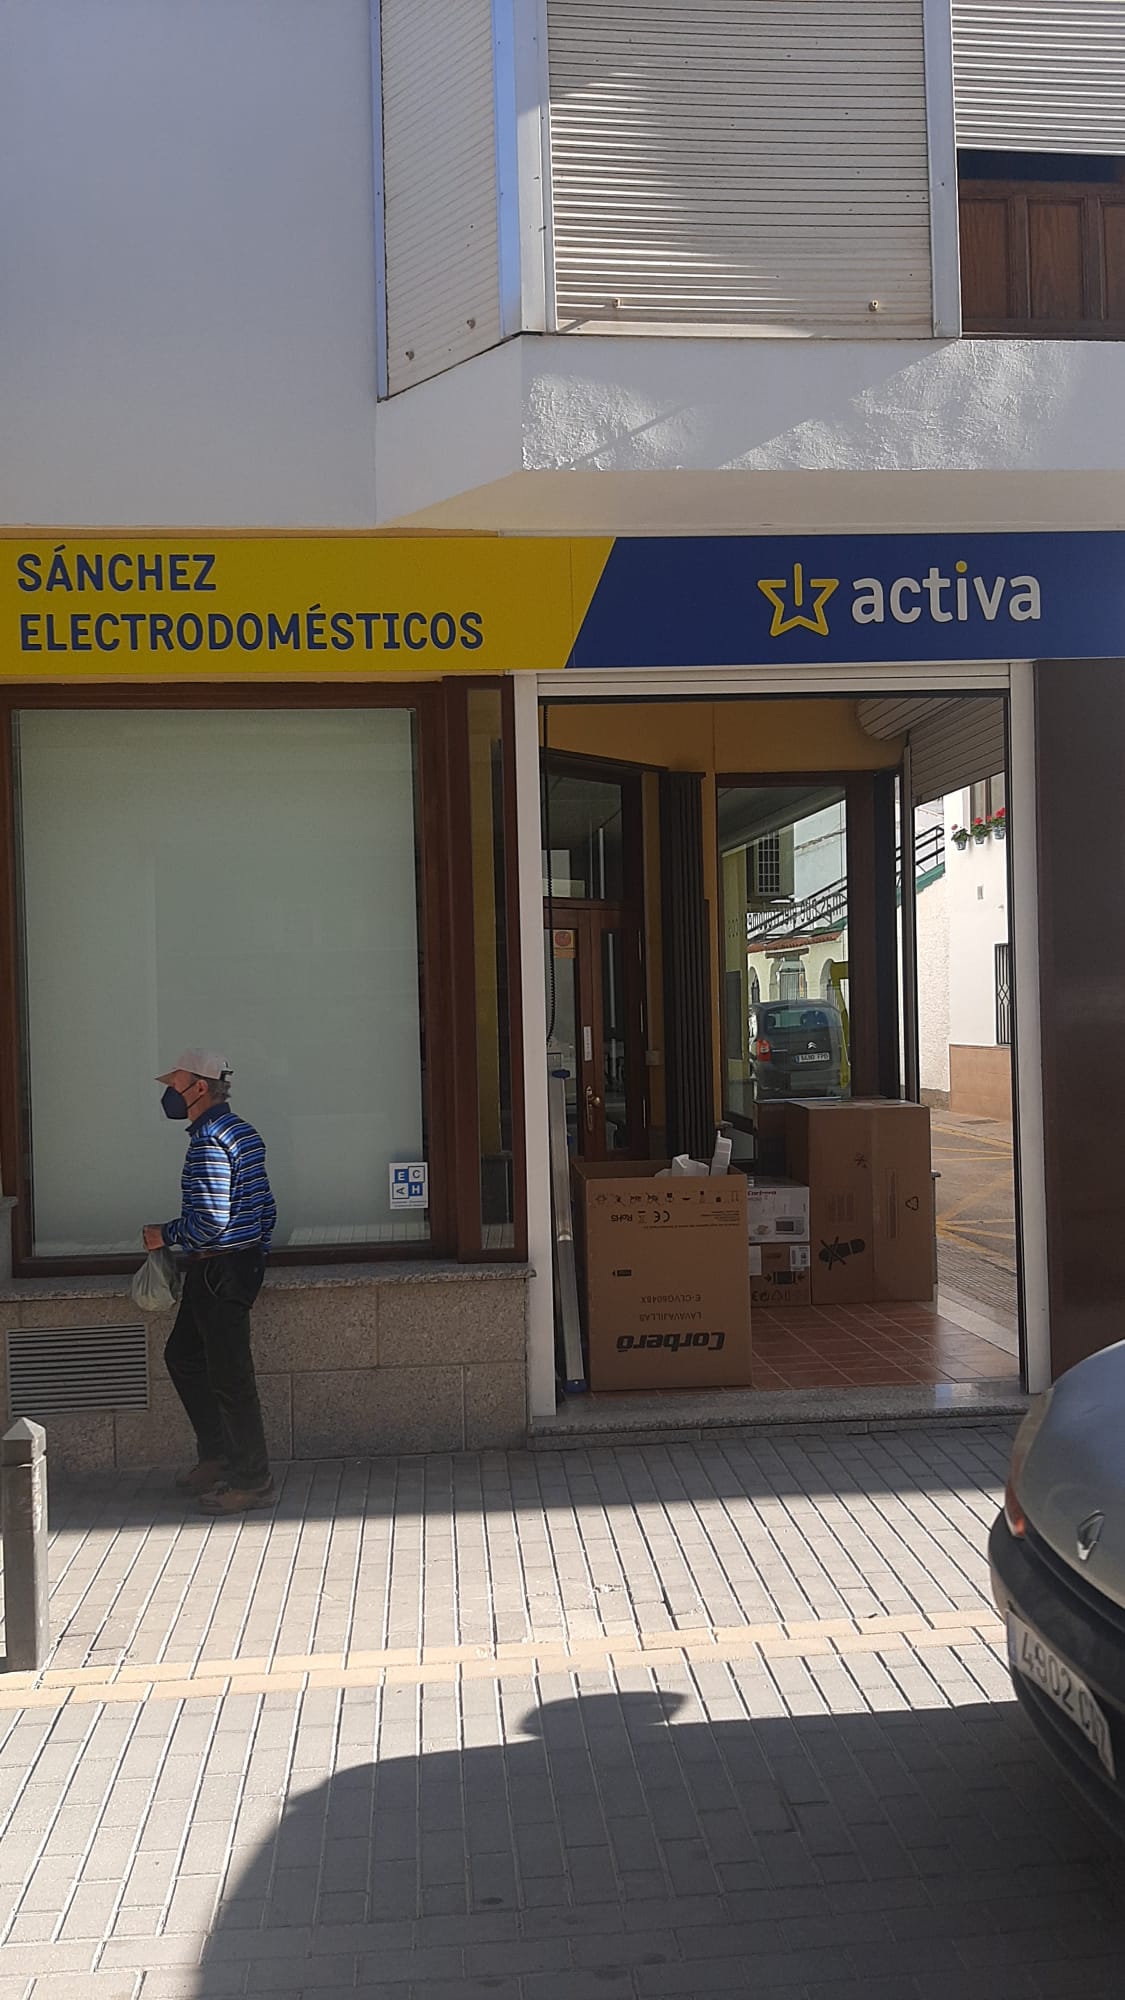 Images Electrodomésticos Sánchez - Huéscar